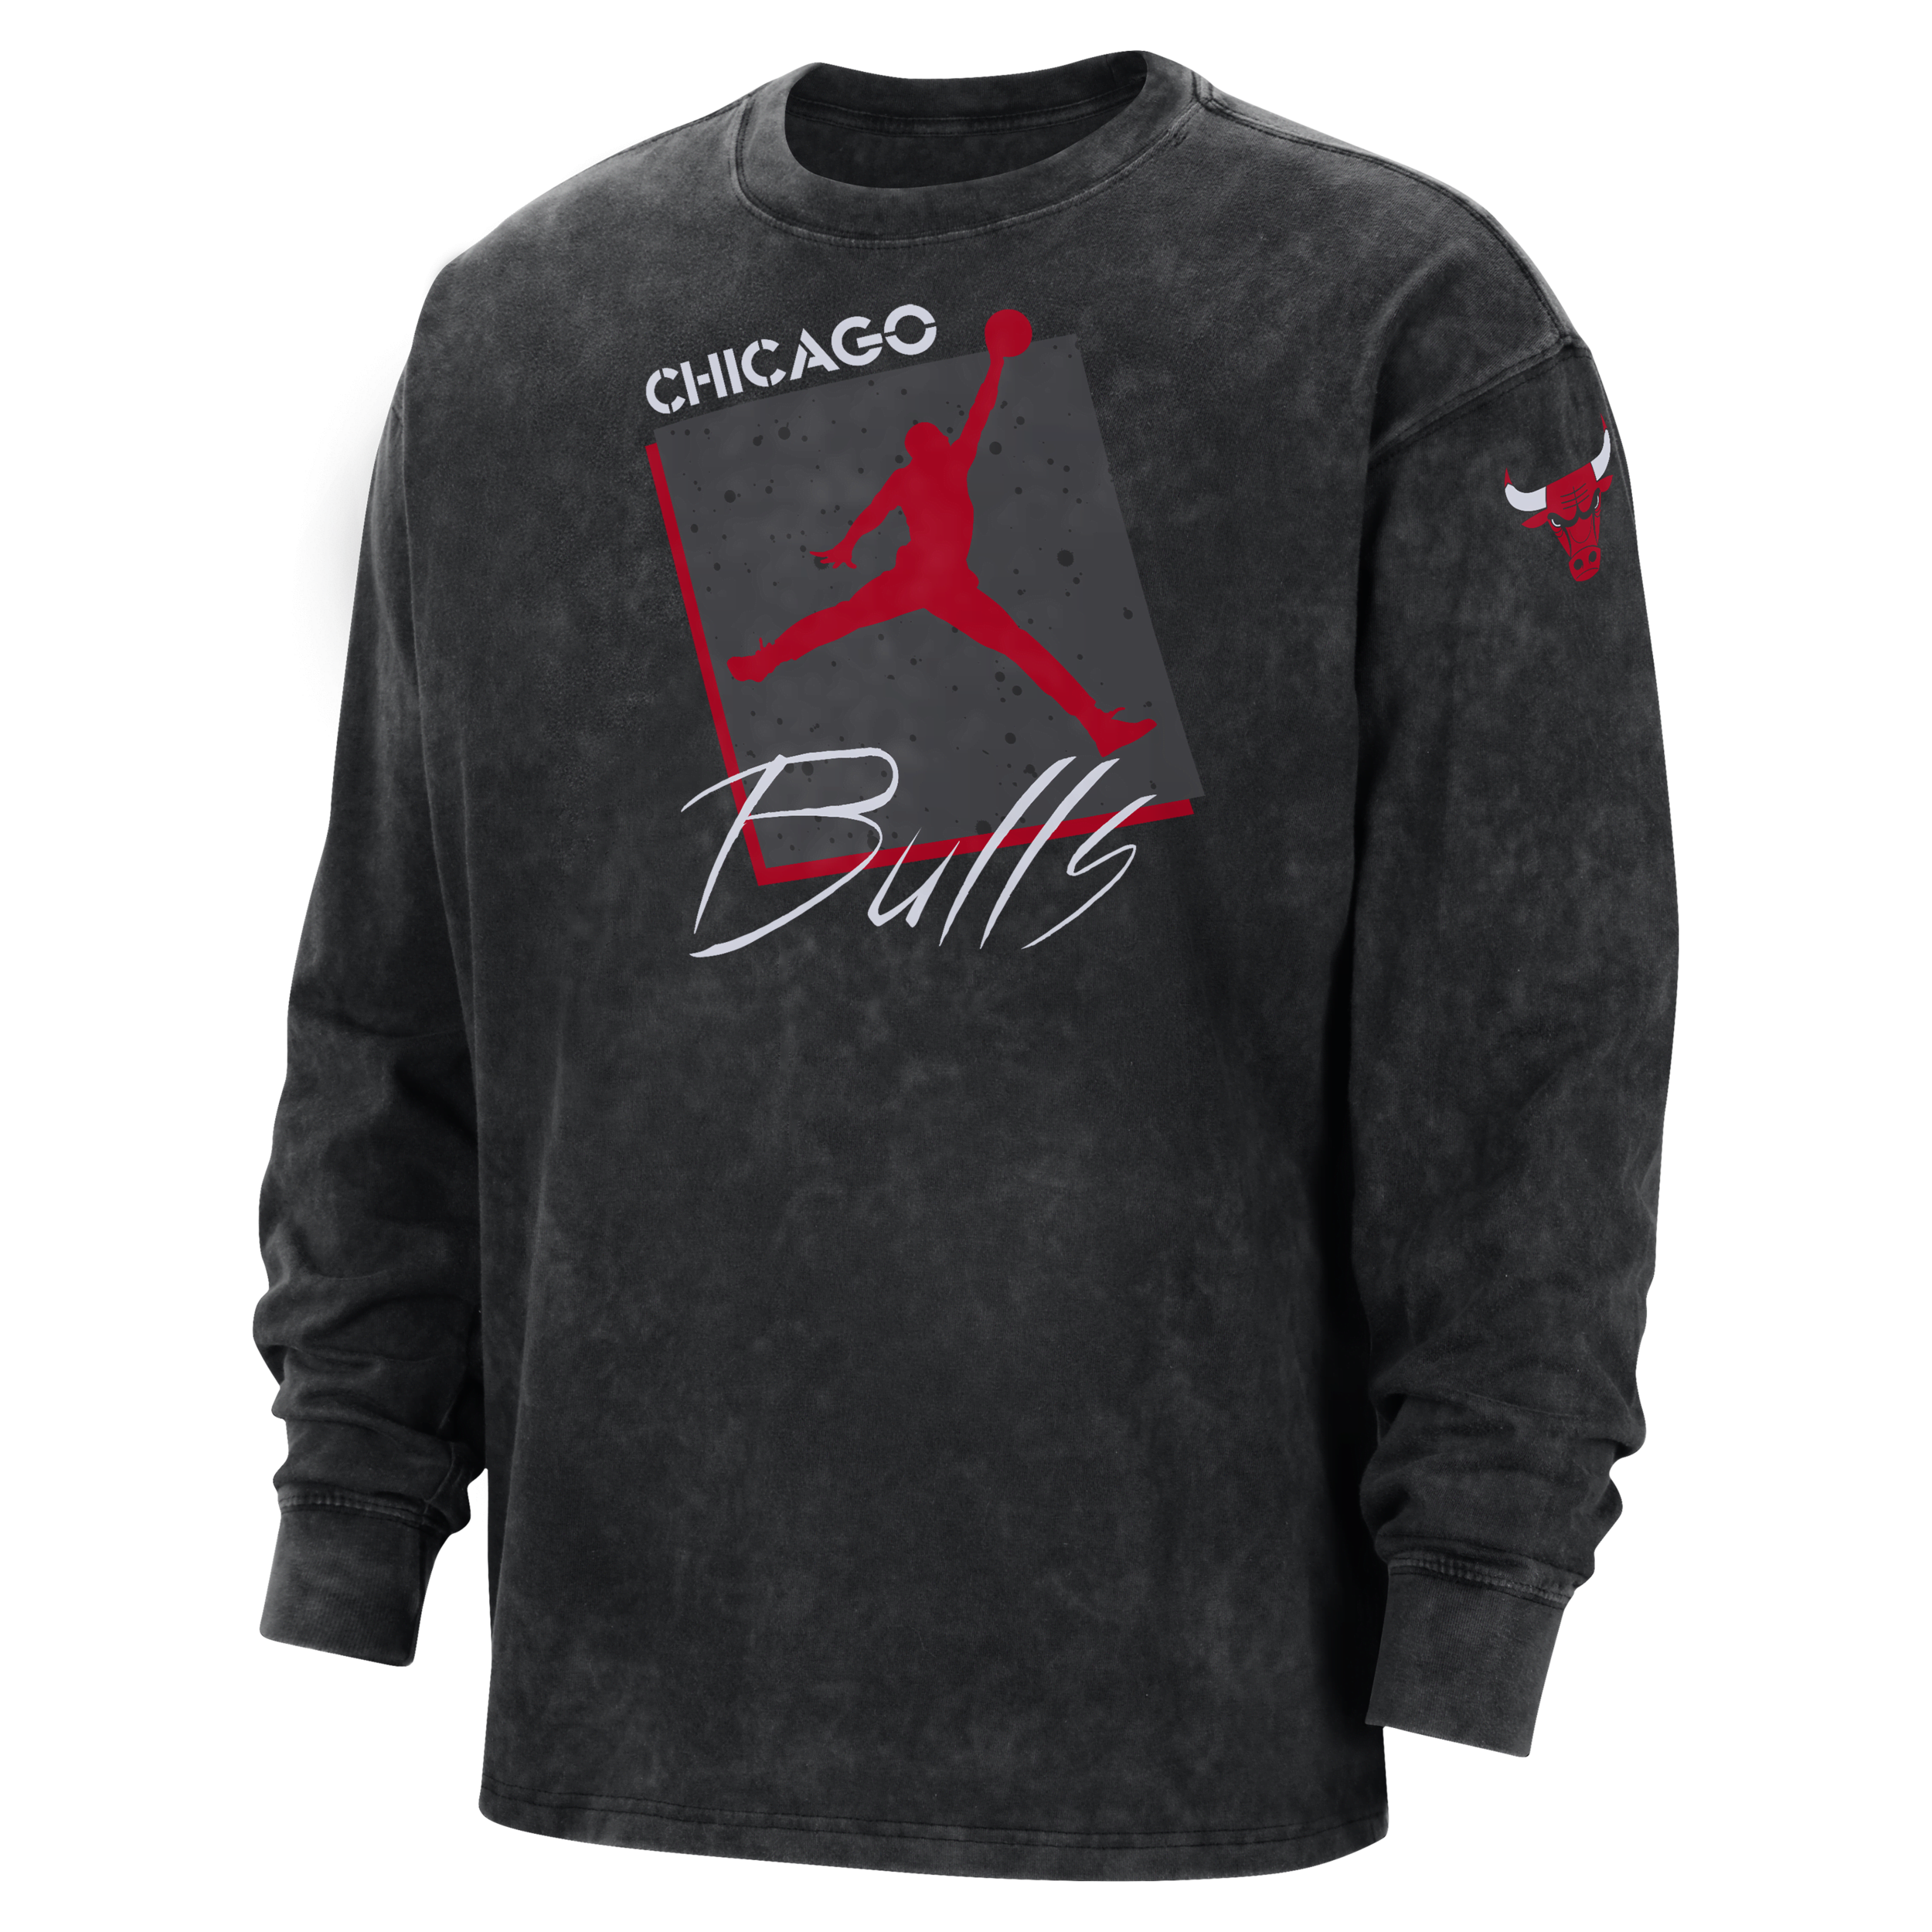 Youth Chicago Bulls Jordan Brand White Courtside Statement Edition Max90  T-Shirt